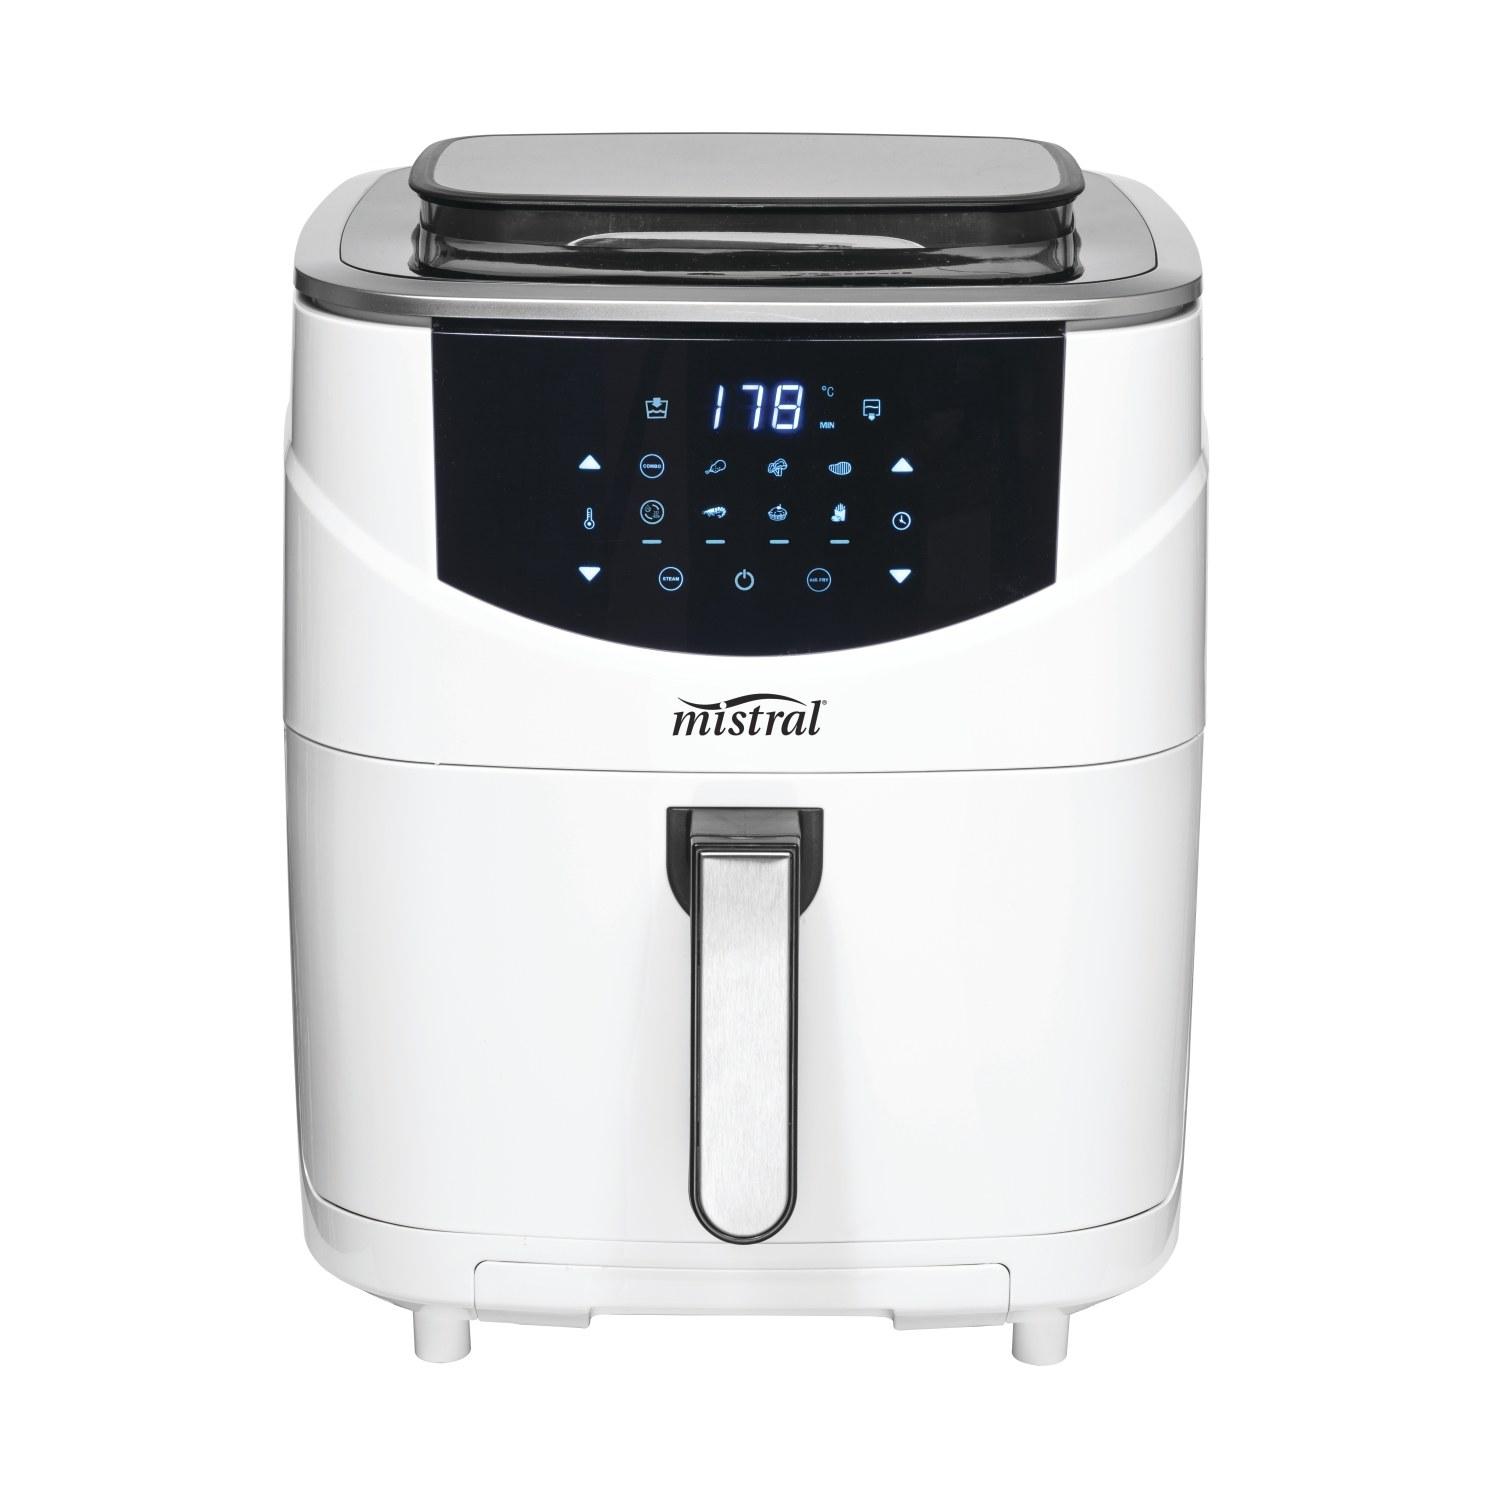 Enjoy healthier meals using the Mistral Digital Steam Air Fryer